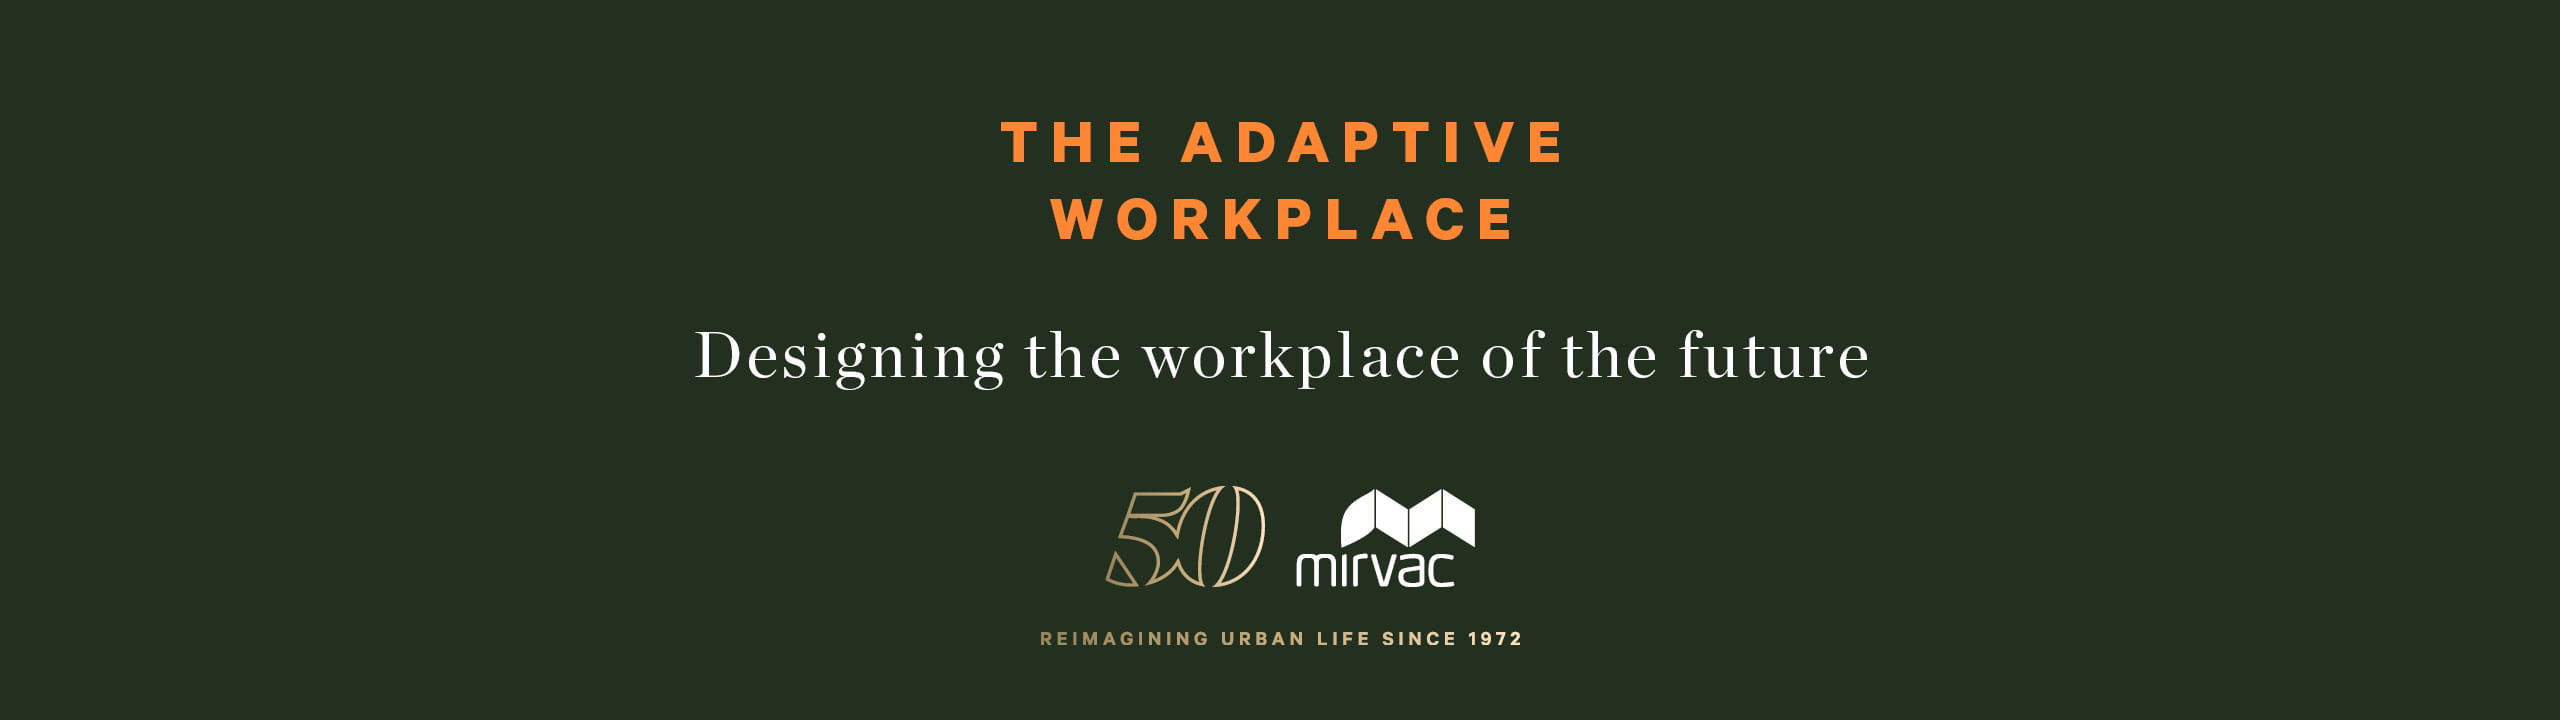 The Adaptive Workplace